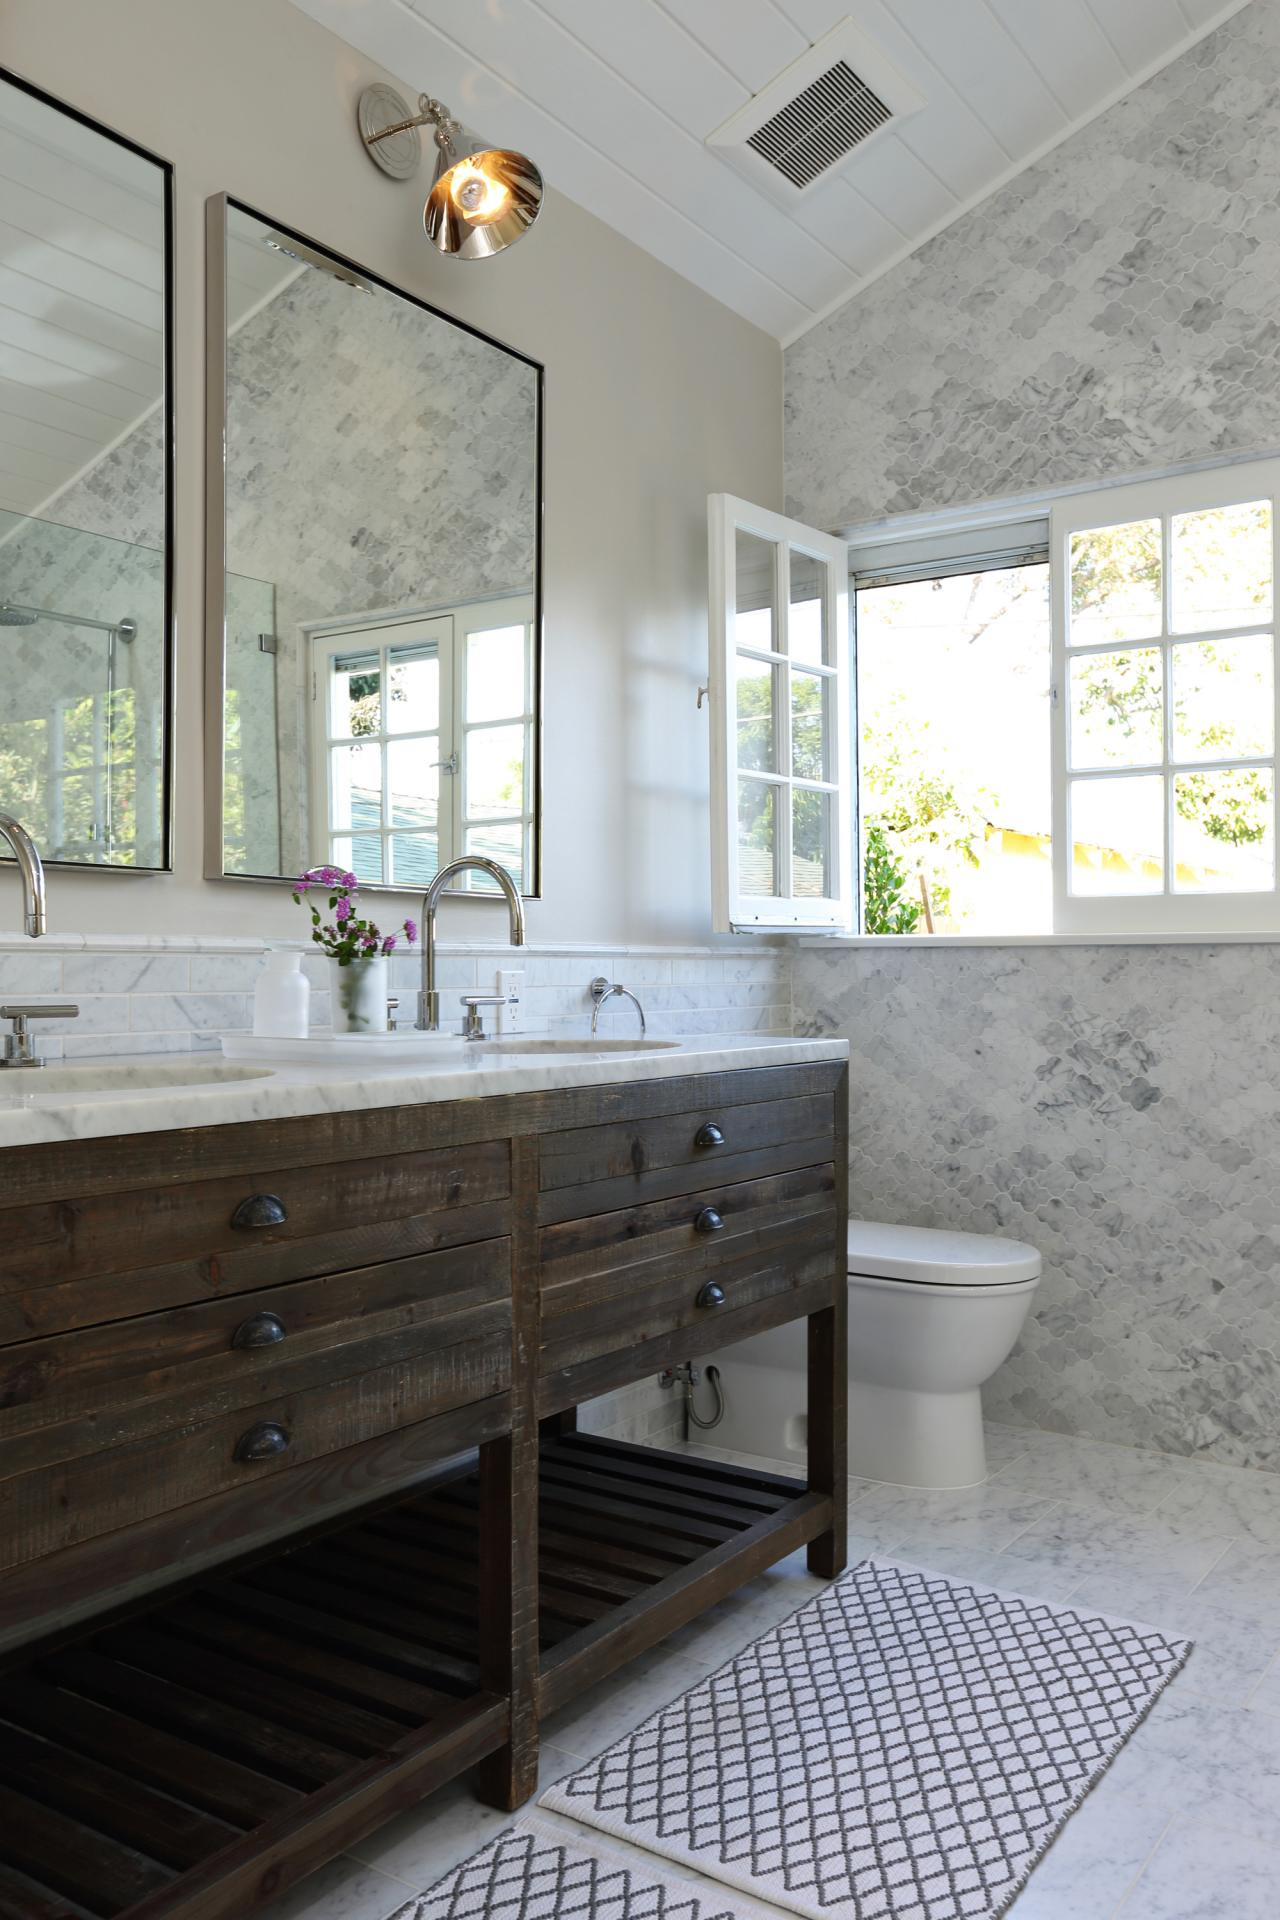 Rustic Bathroom Floor Tiles
 10 Rustic Bathroom Vanities to Consider